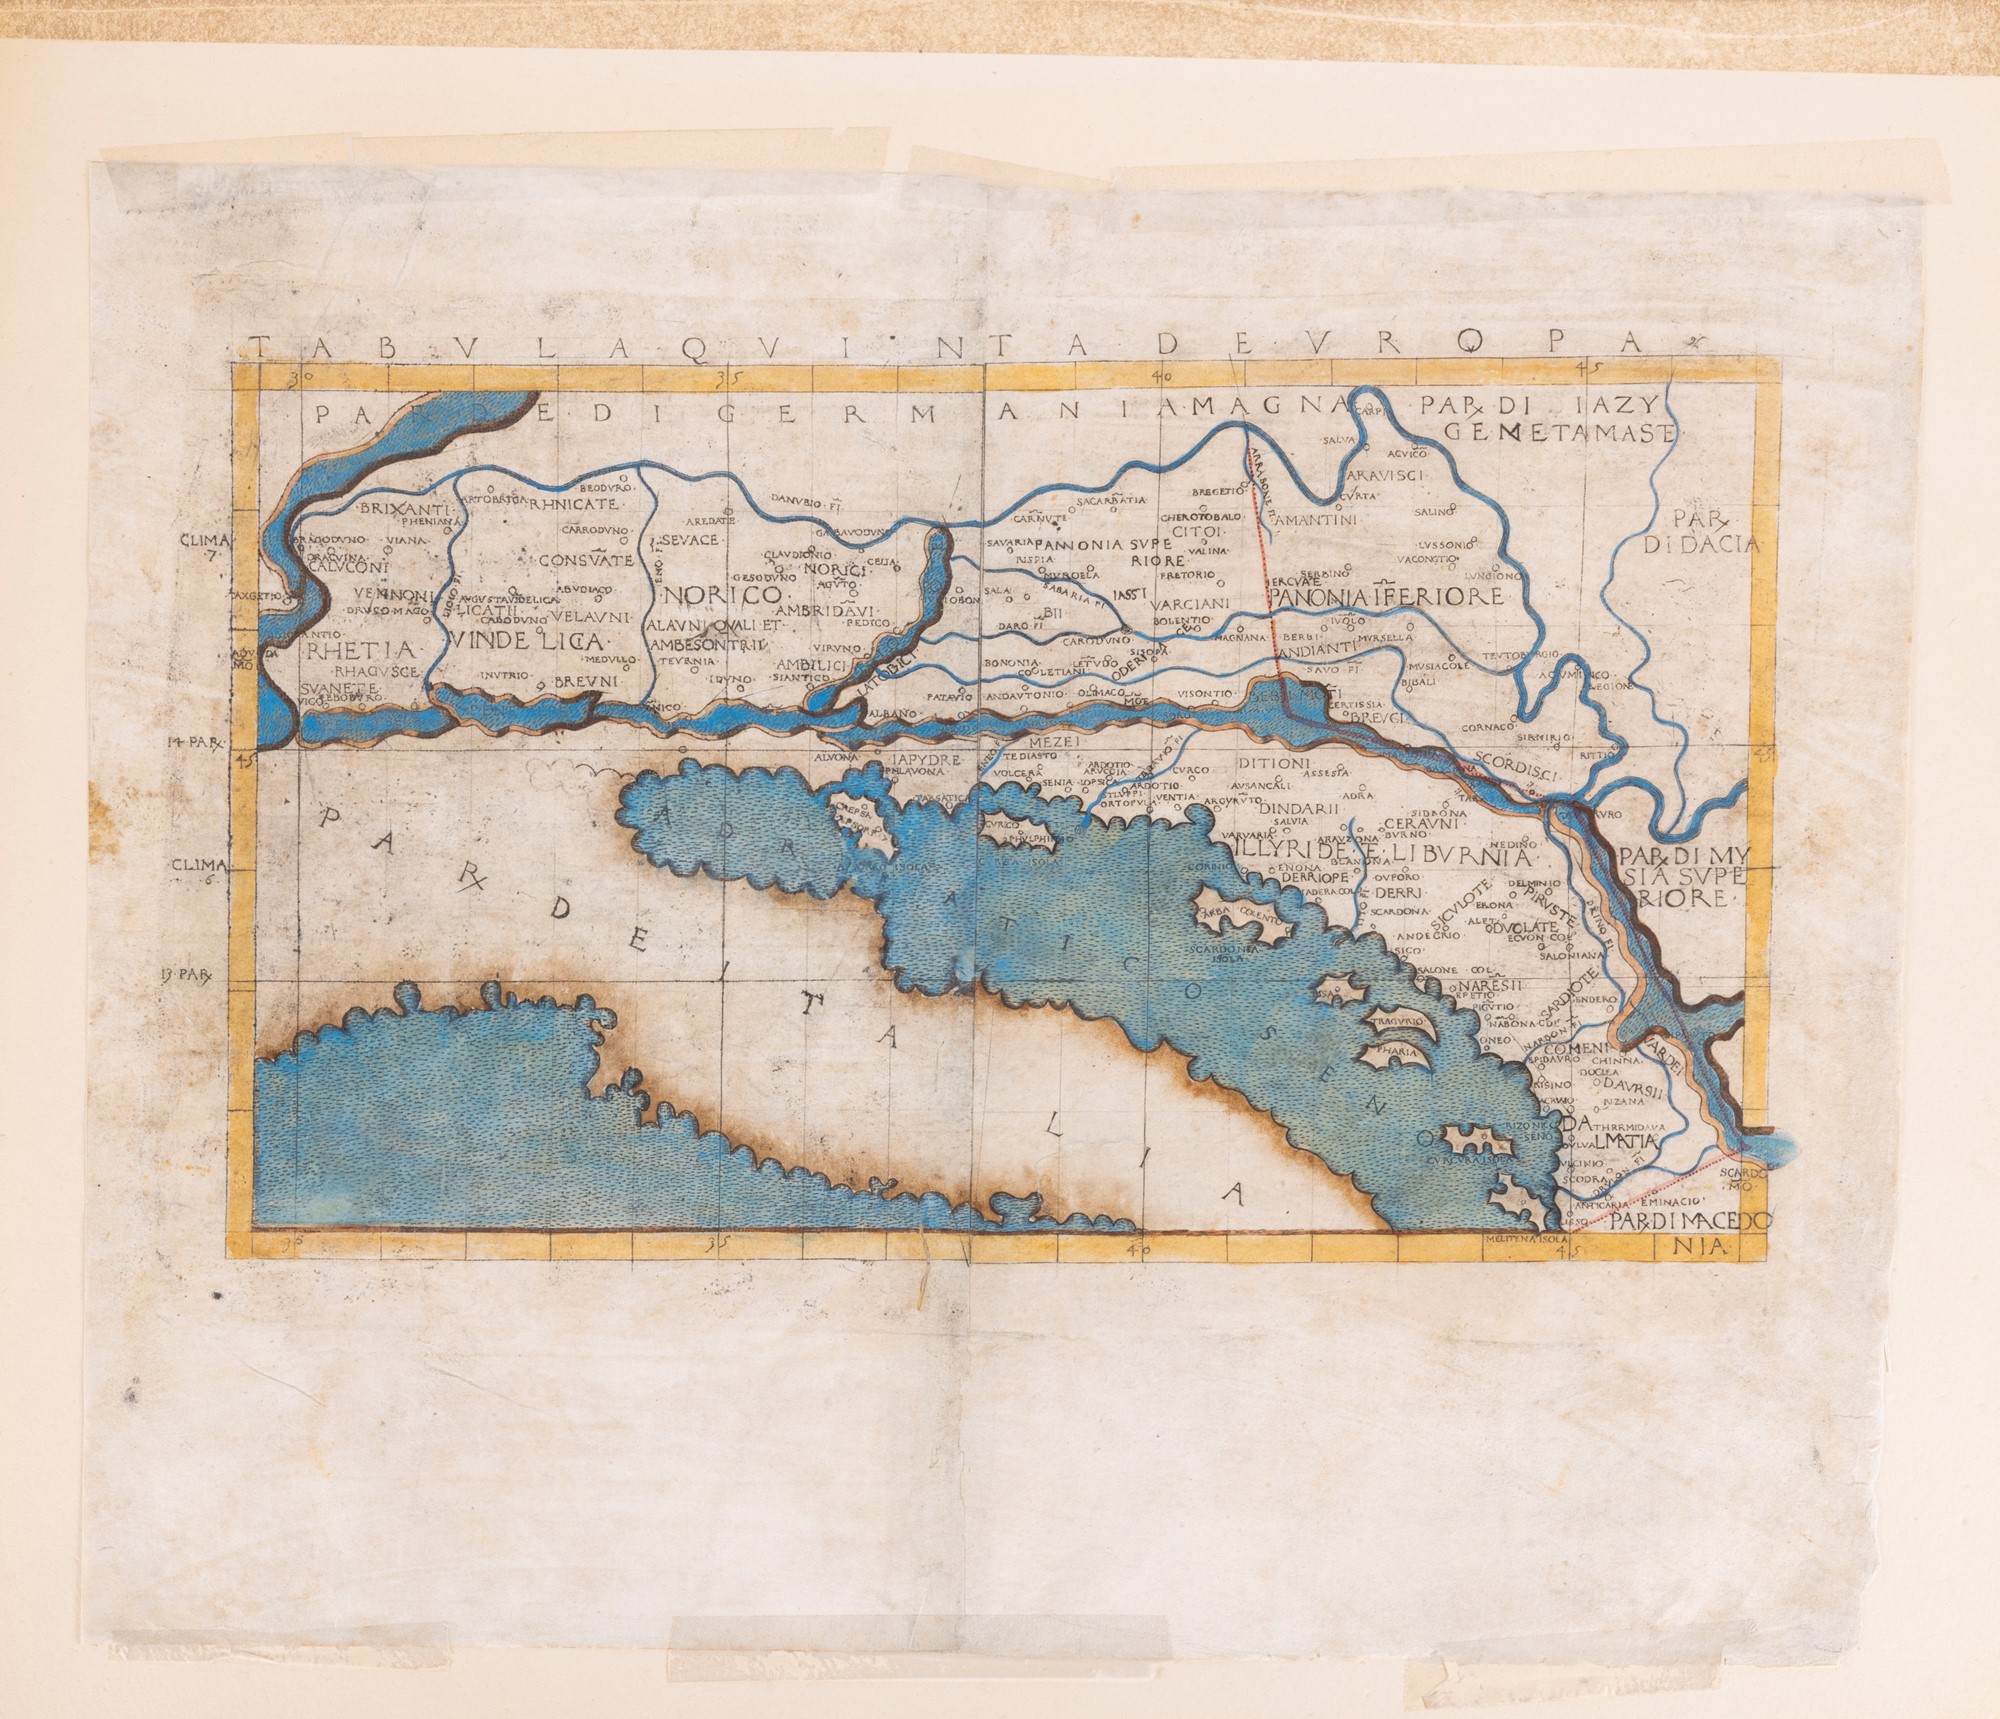 Dalmatia - Berlinghieri, Francesco - Fifth table of Europe